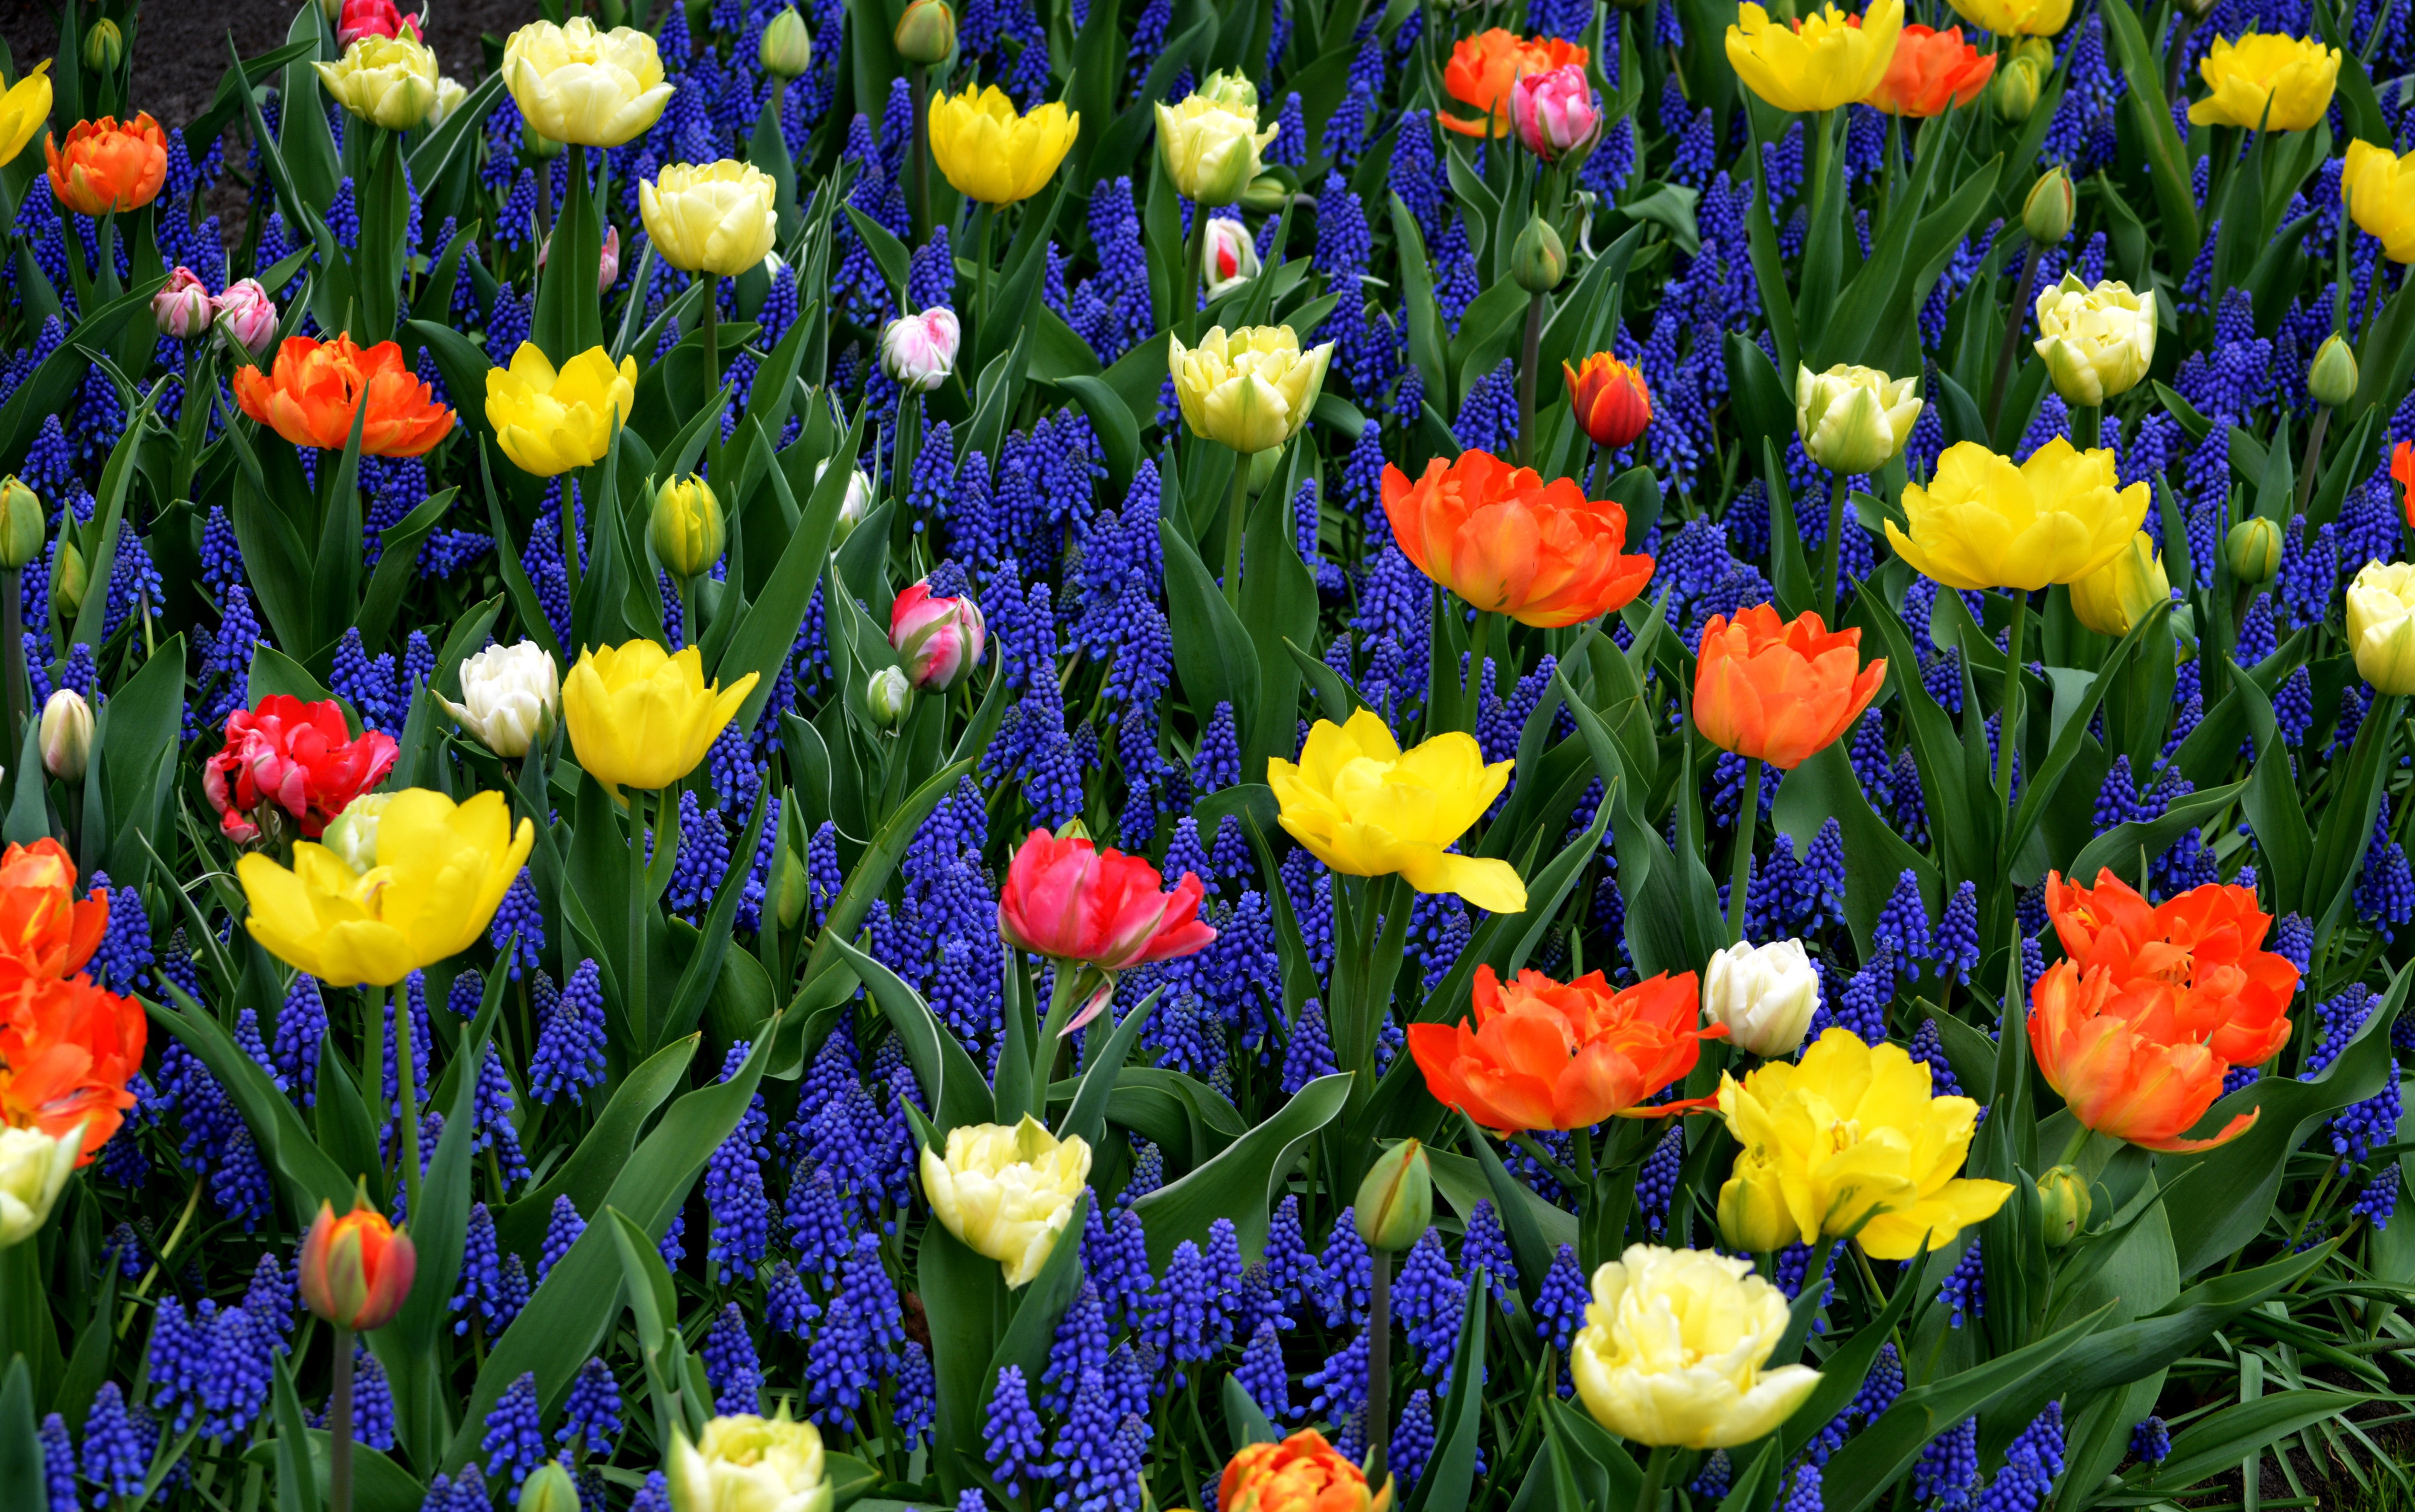 416260 descargar imagen tierra/naturaleza, flor, flor azul, jacinto, flor naranja, tulipán, flor amarilla, flores: fondos de pantalla y protectores de pantalla gratis